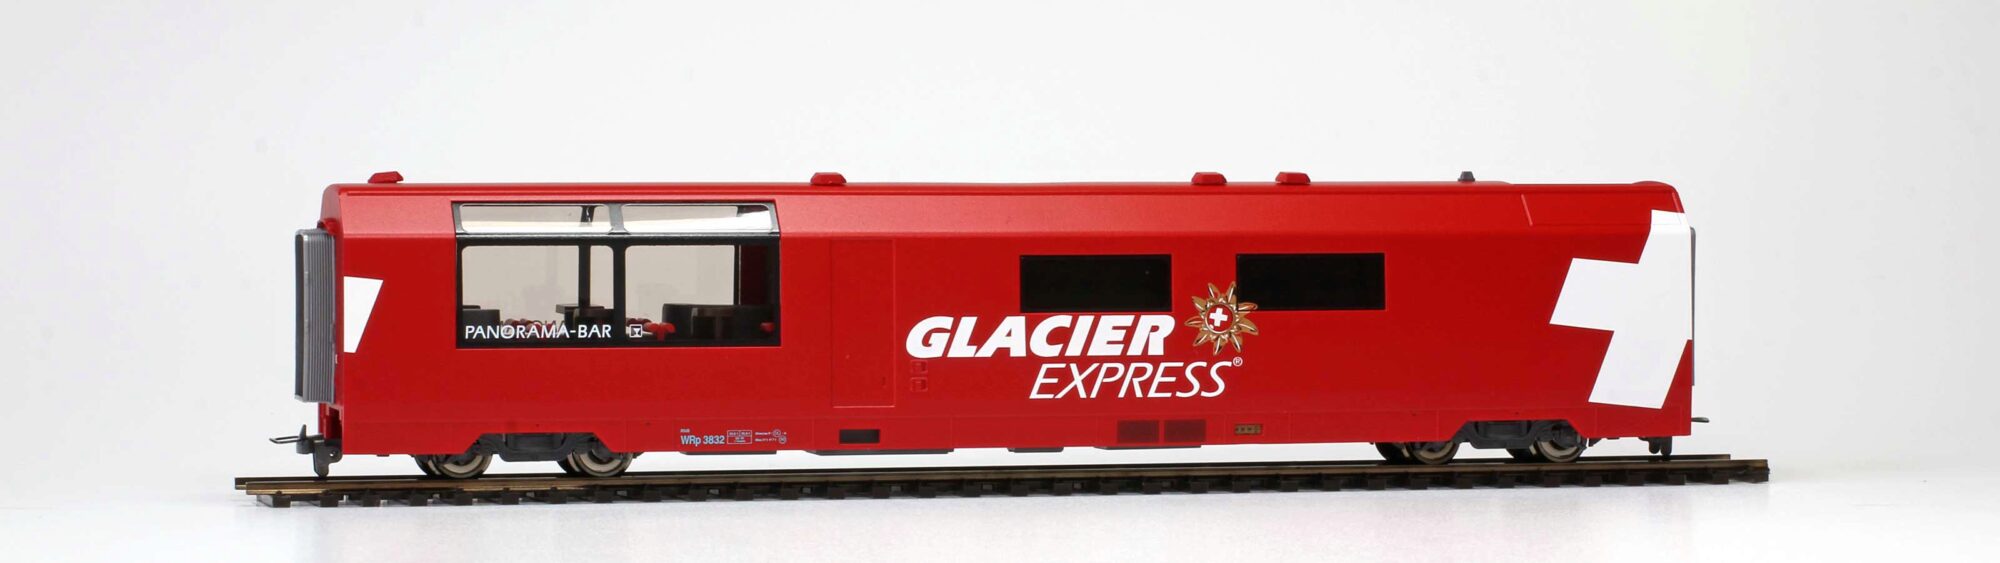 Bemo 3289132 RhB WRp 3832 "Glacier-Express" Servicewagen